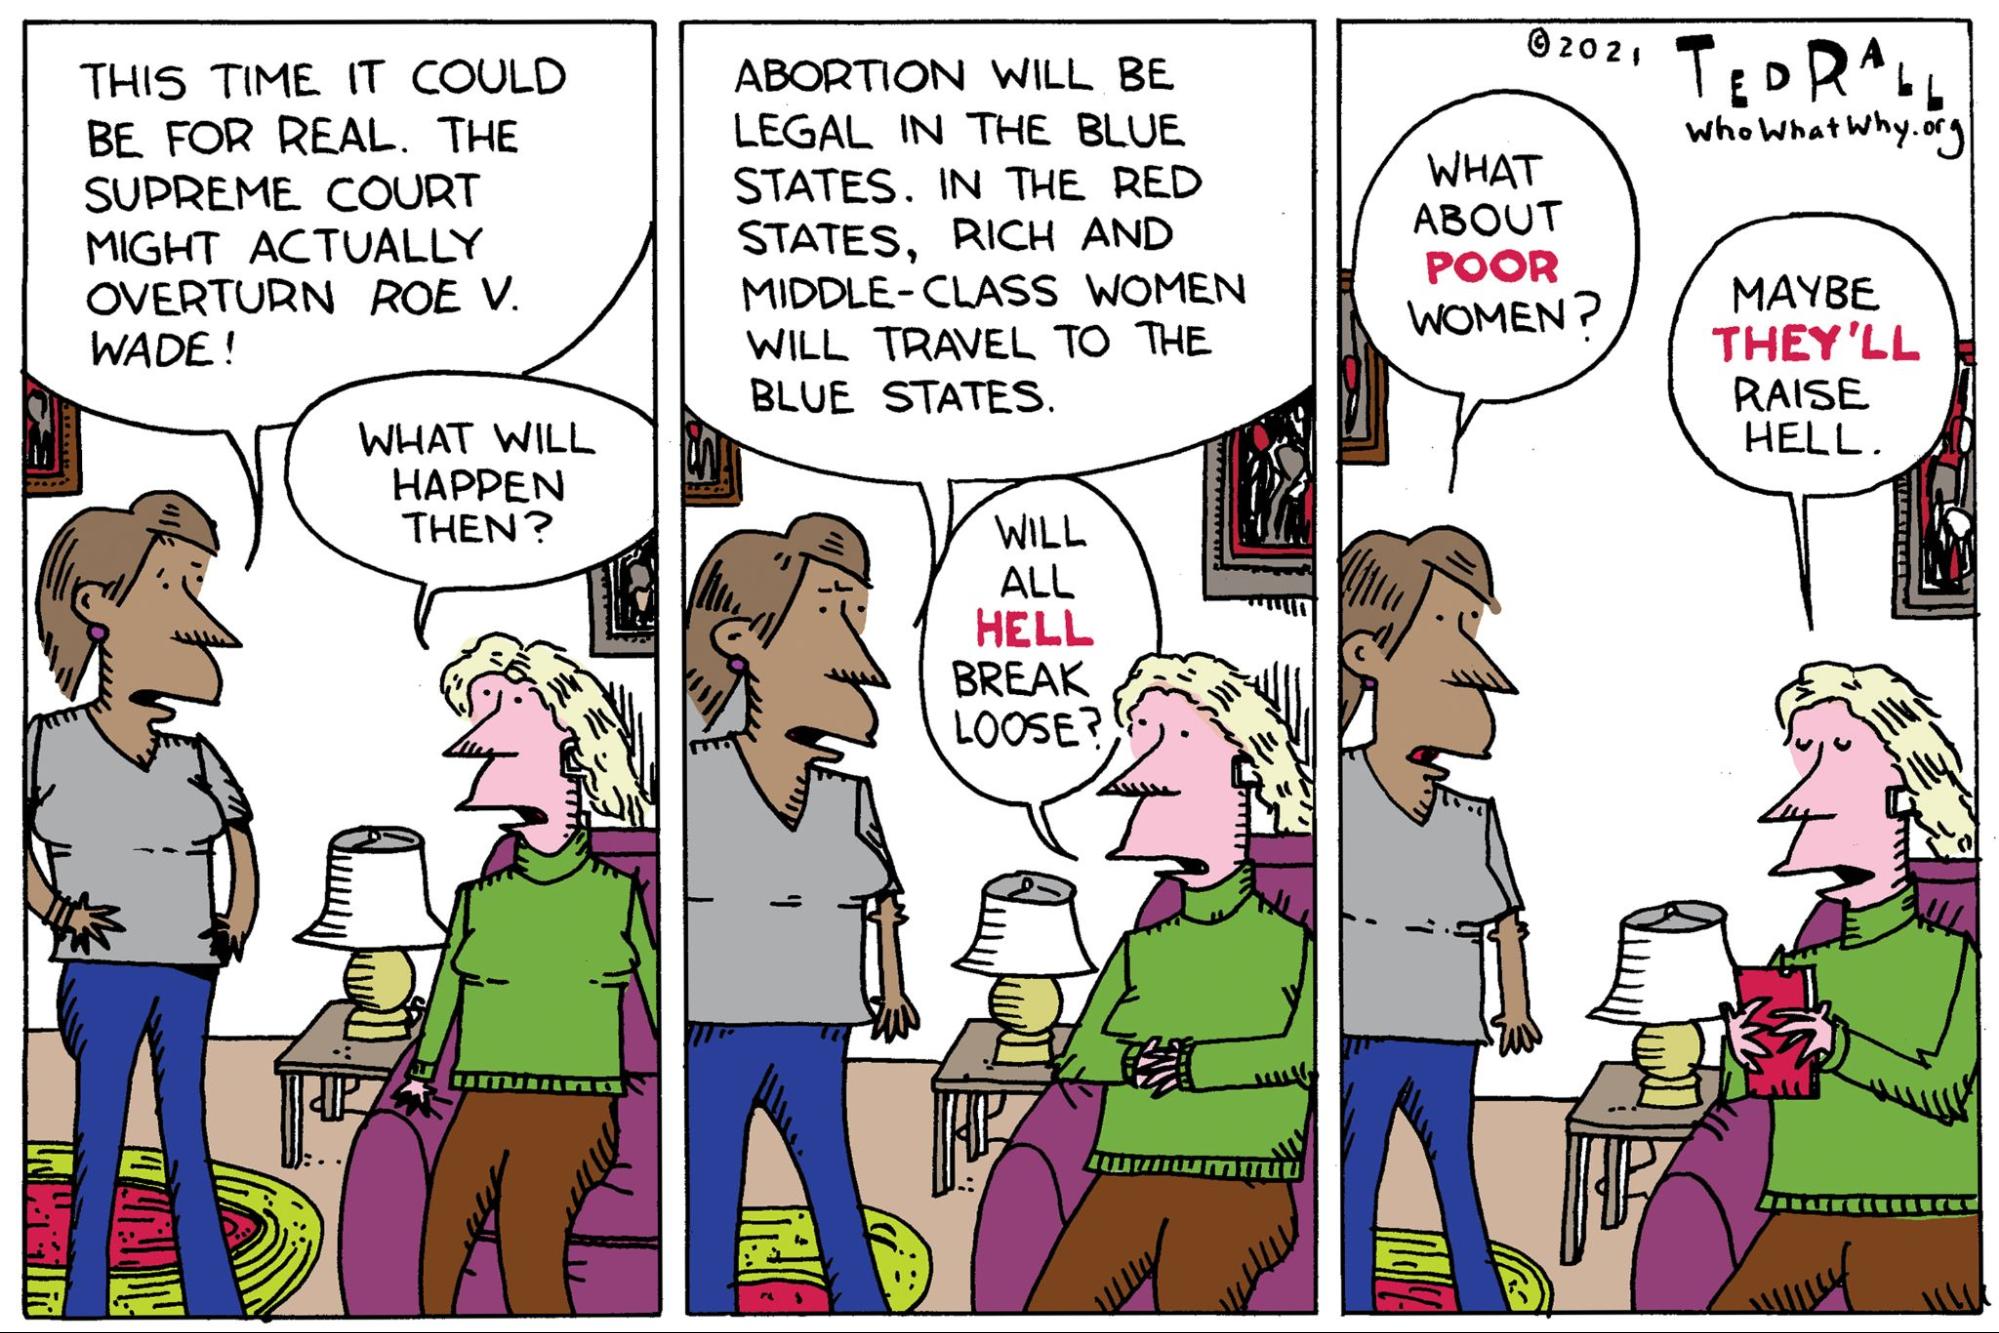 Roe v Wade, abortion, rights